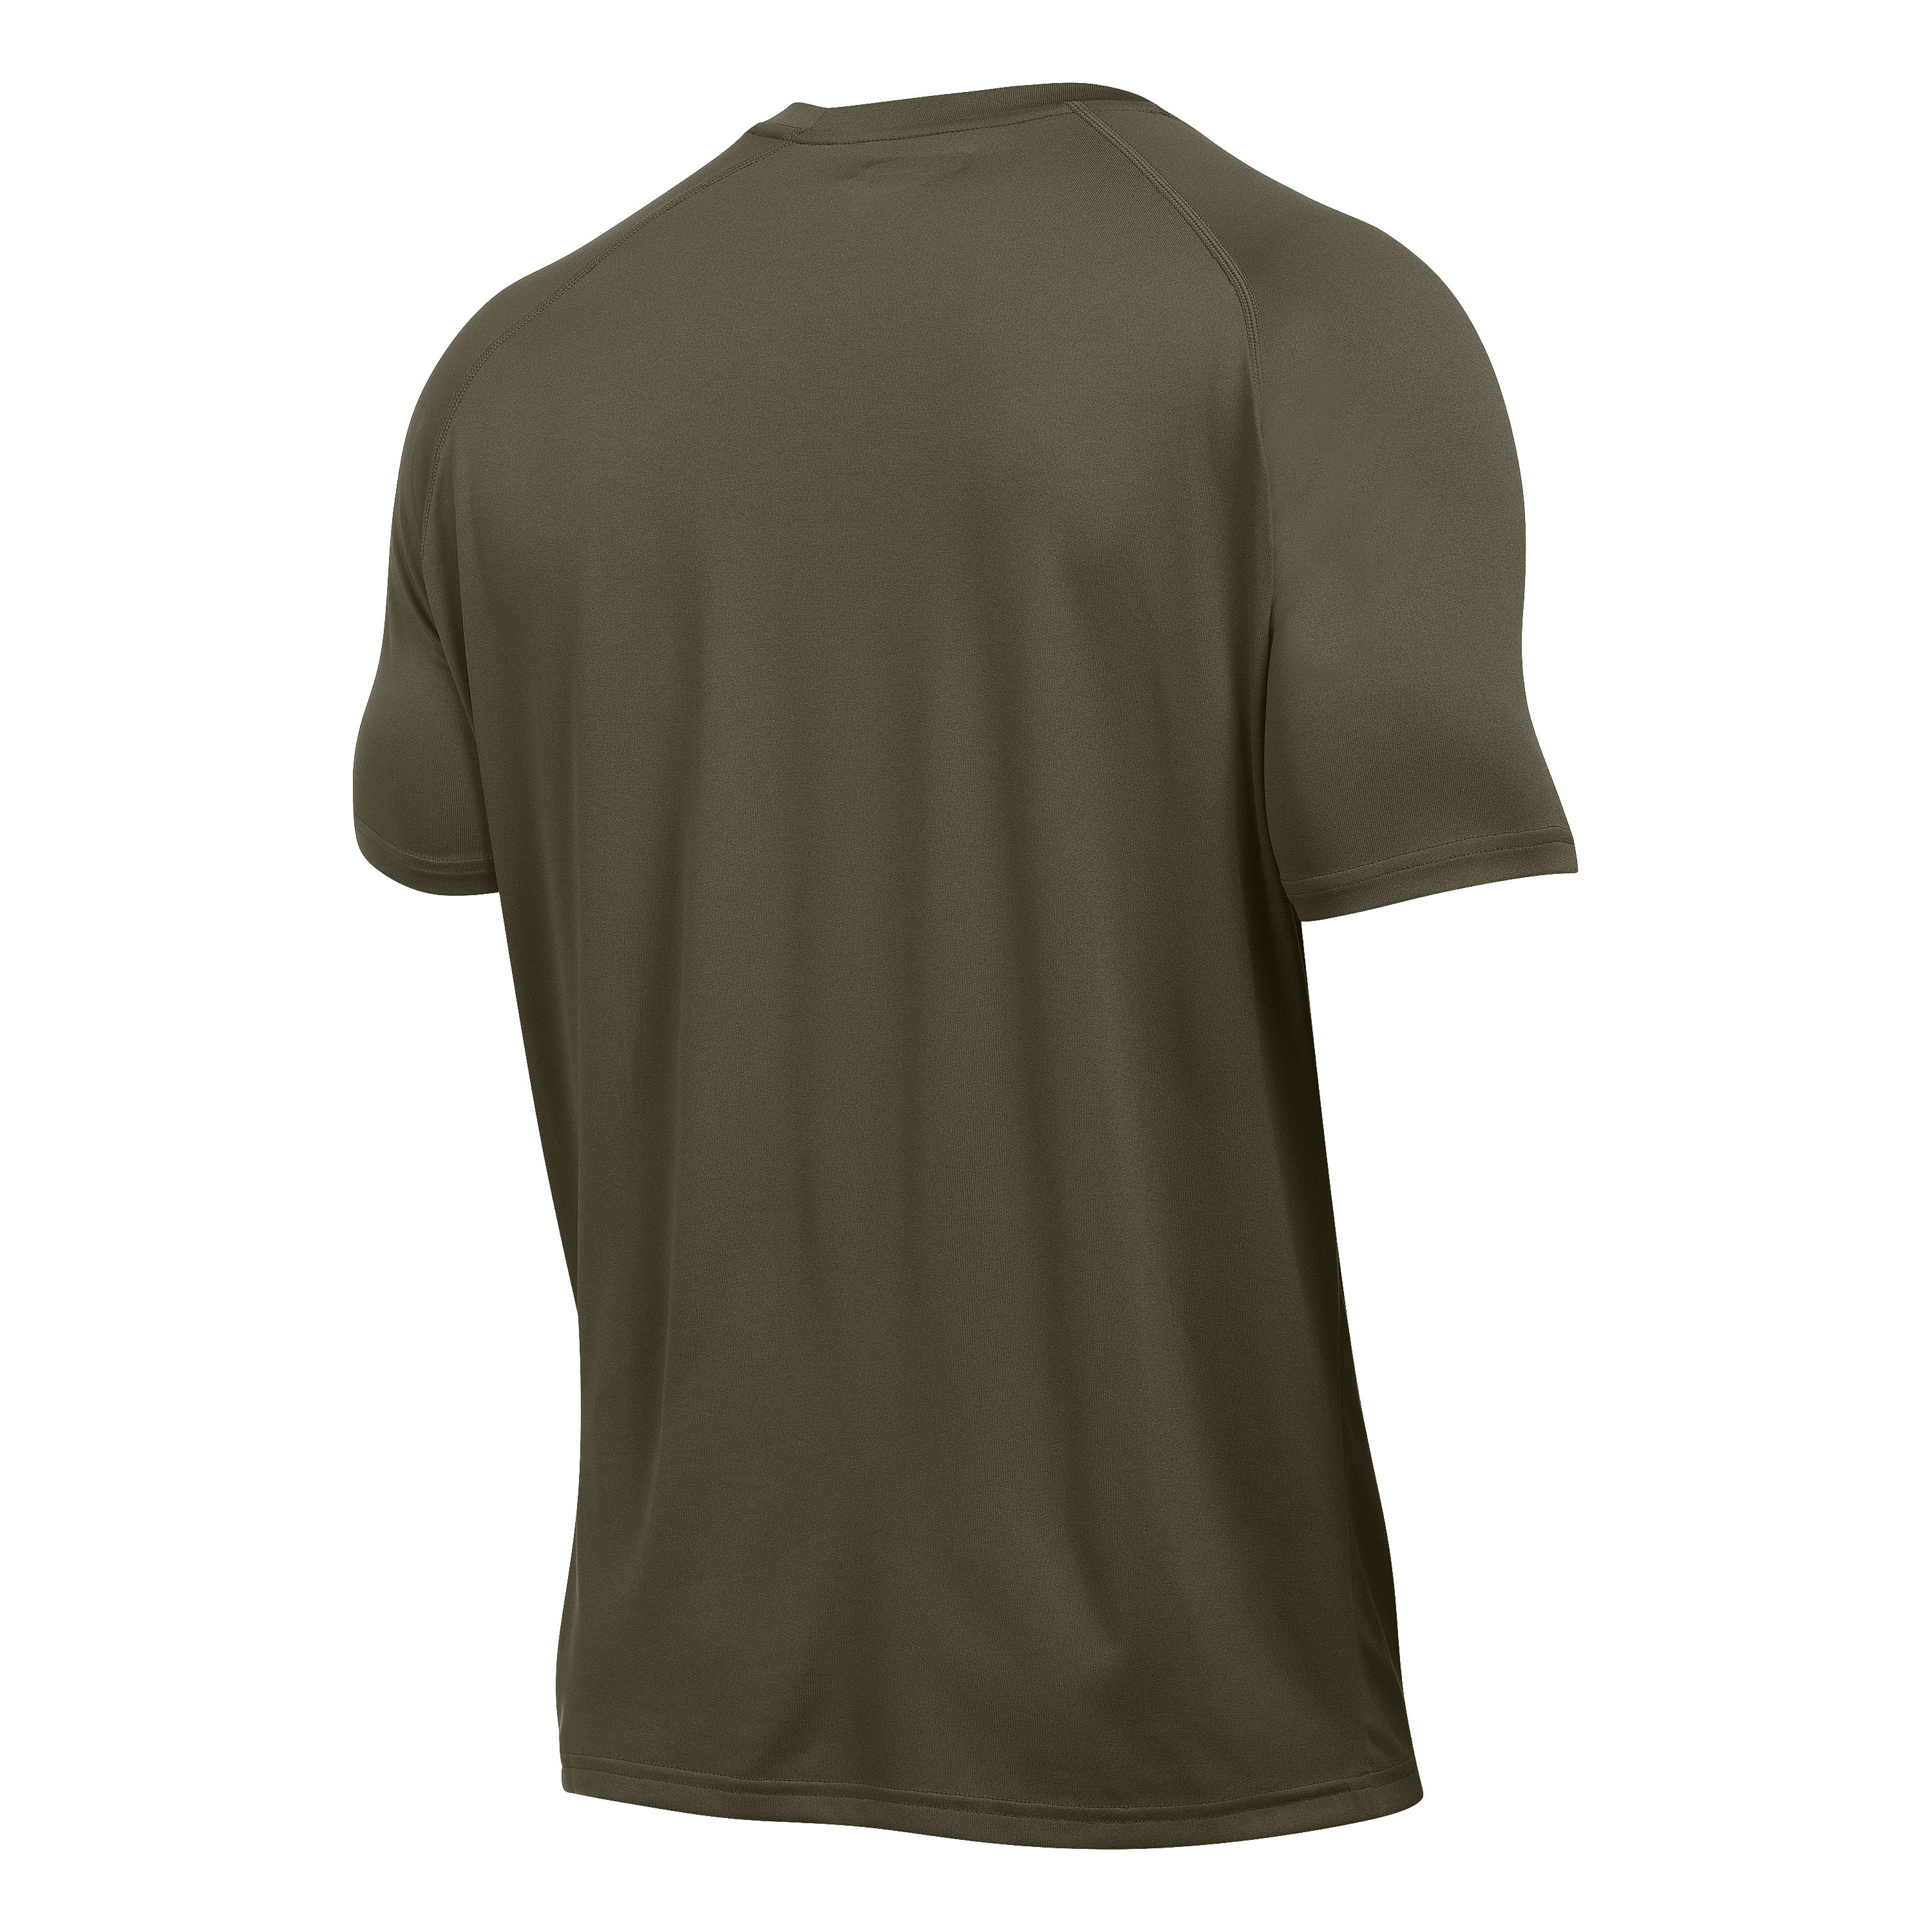 inventar Café Rizado Camiseta táctica Under Armour Training Tee verde oliva